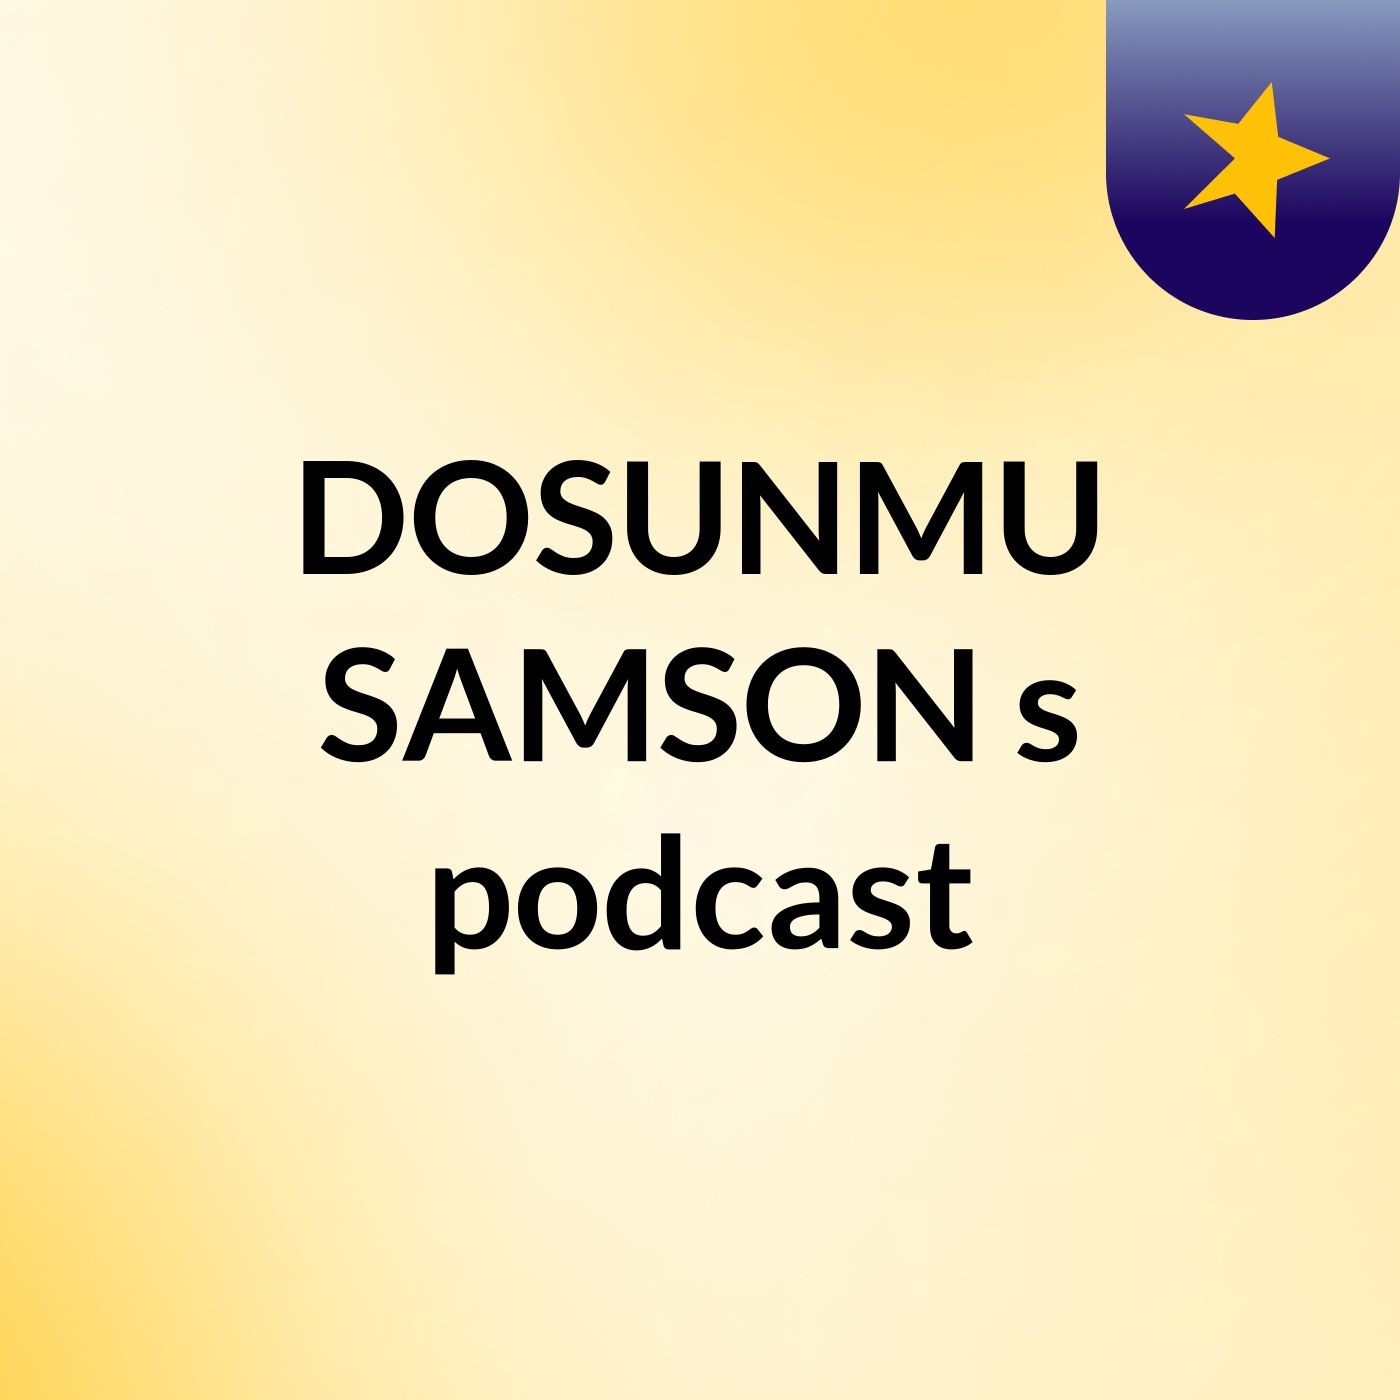 Episode 8 - DOSUNMU SAMSON's podcast